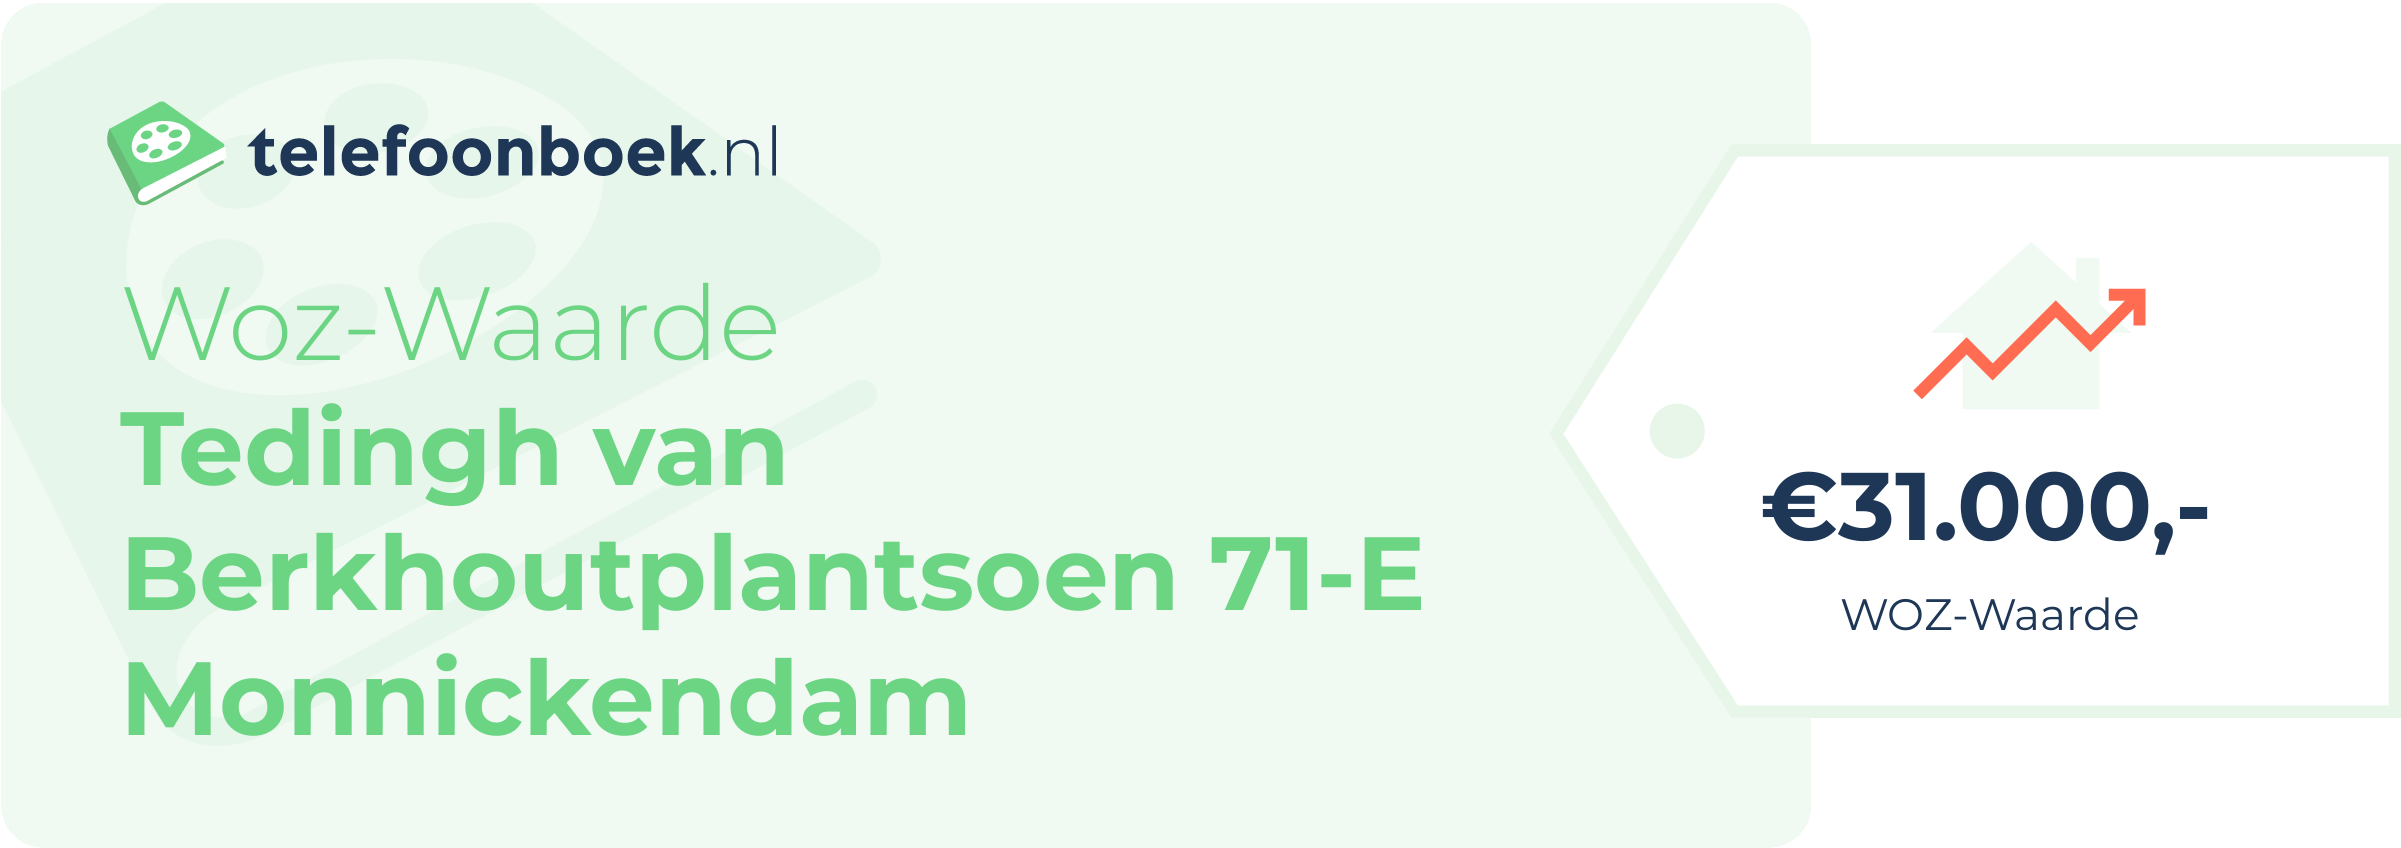 WOZ-waarde Tedingh Van Berkhoutplantsoen 71-E Monnickendam